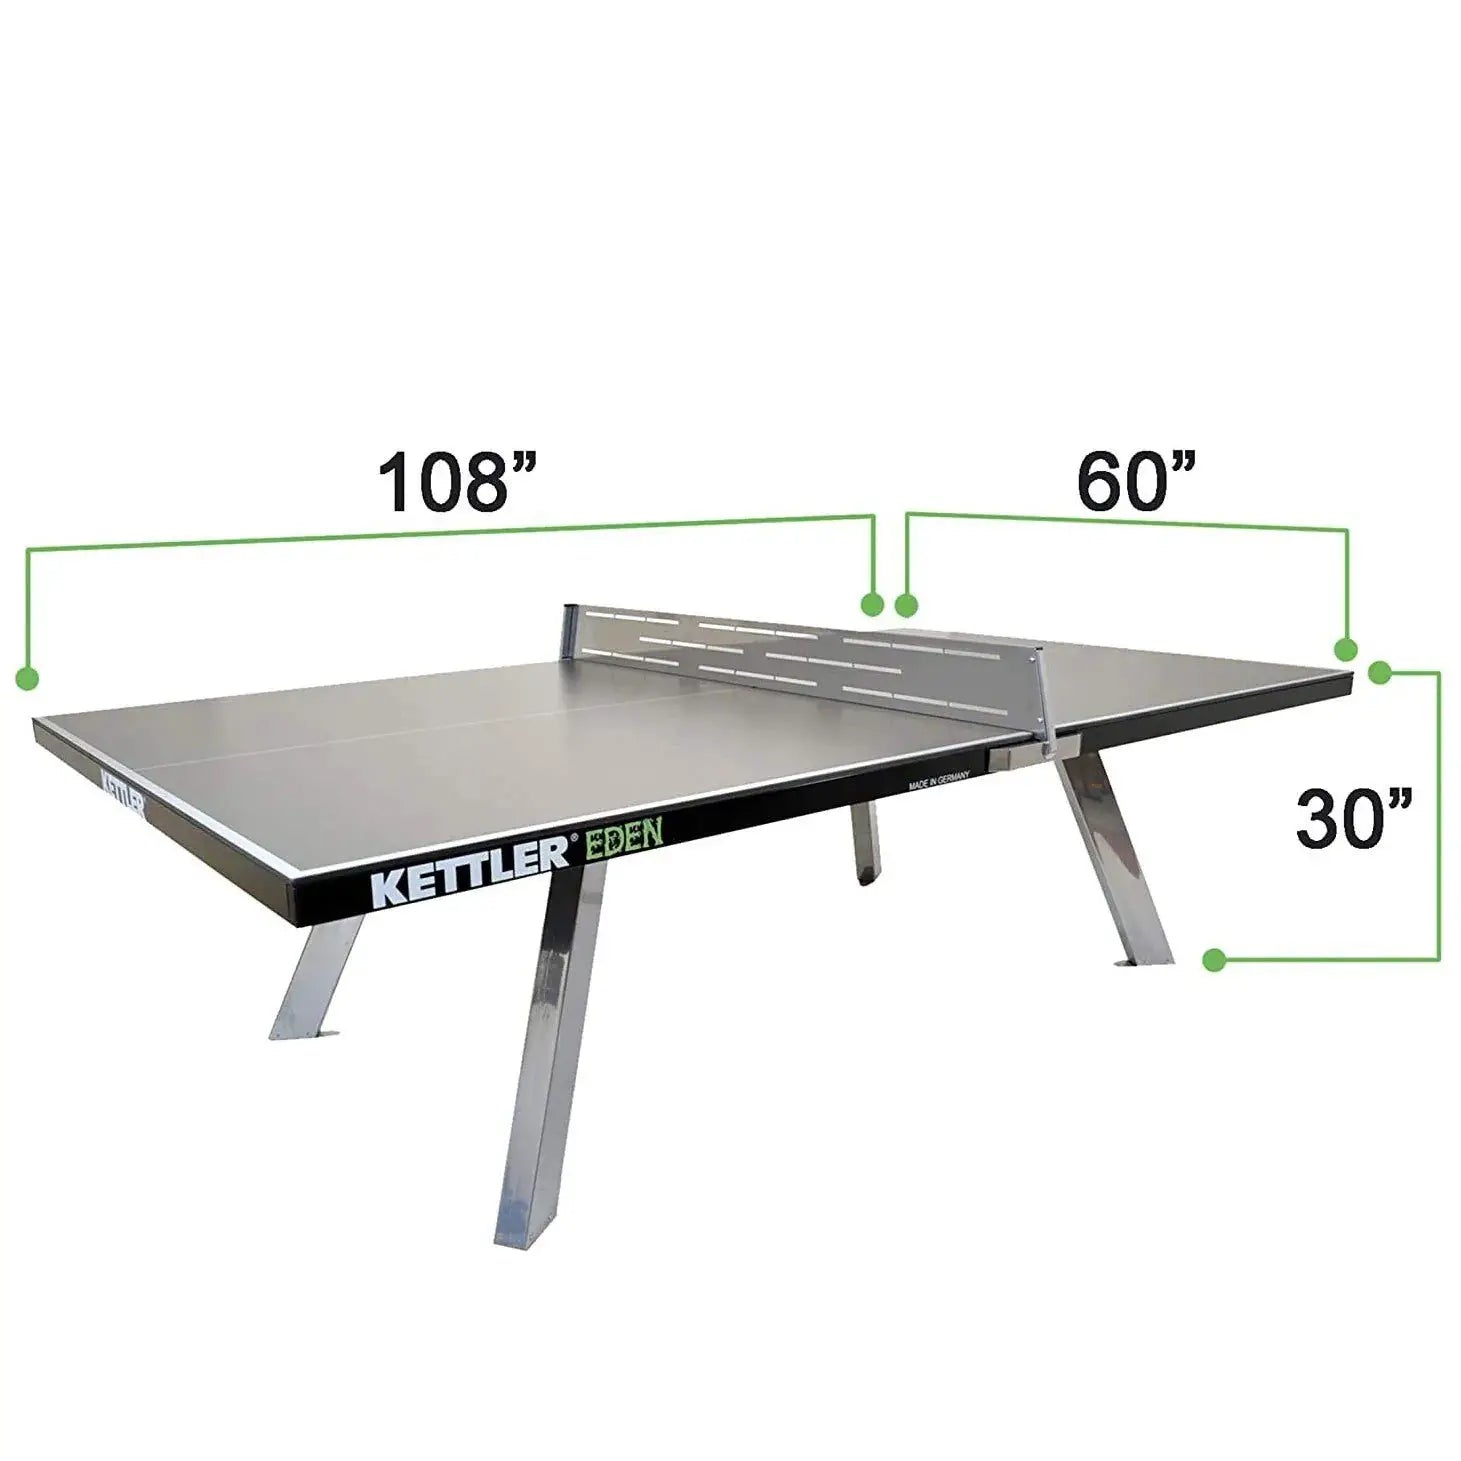 Kettler USA EDEN OUTDOOR Stationary Weatherproof TT Table Tennis Table